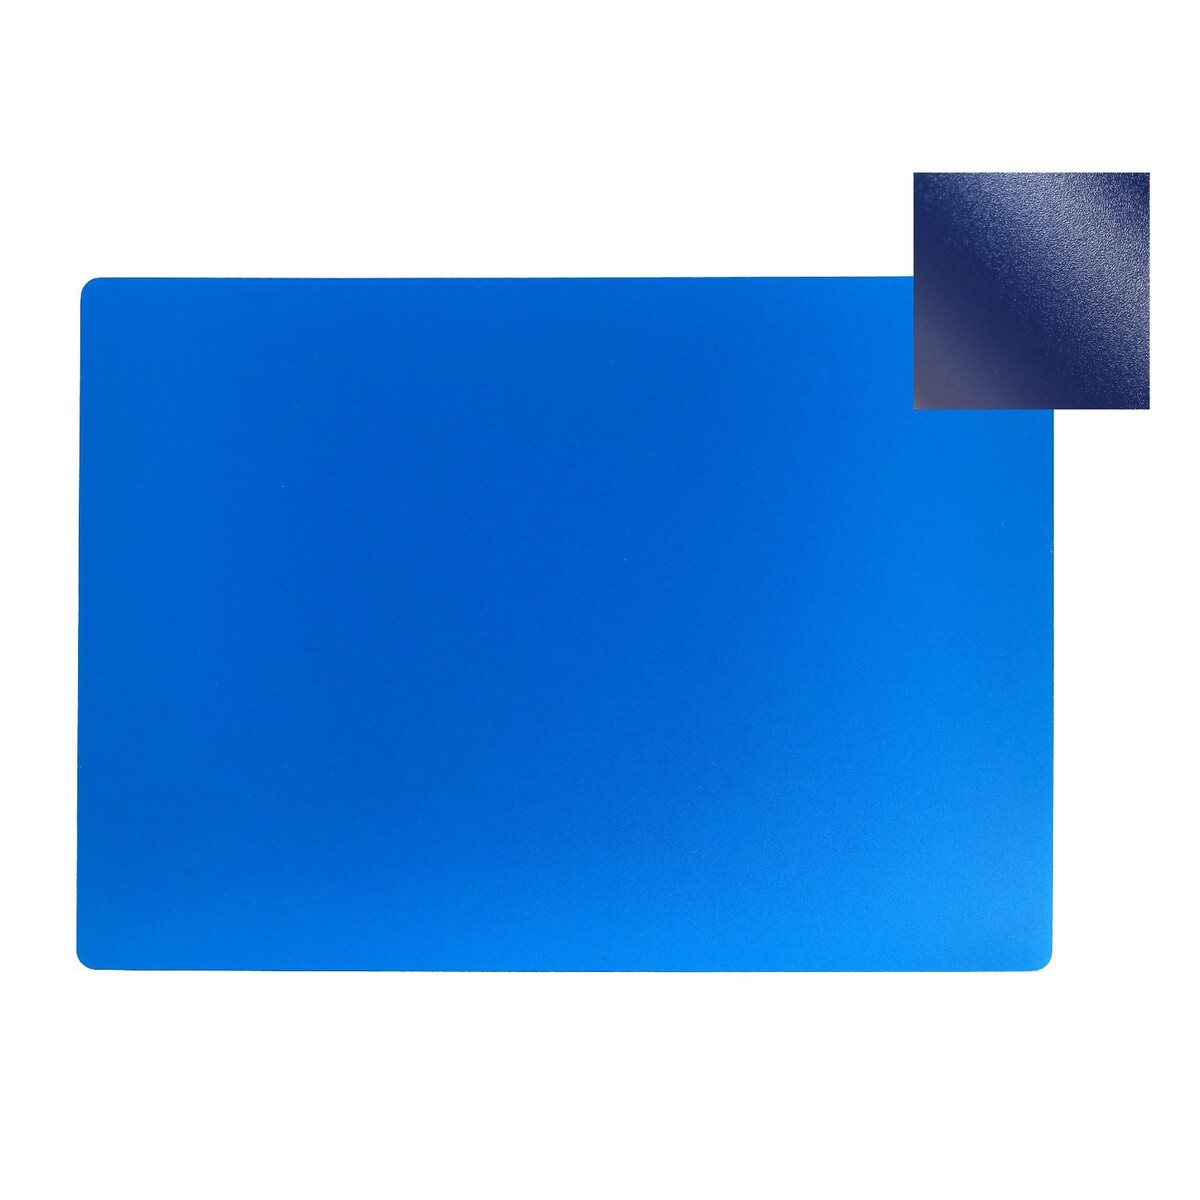 Накладка на стол пластиковая а4, 339 х 244 мм, 500 мкм, прозрачная, темно-синяя (подходит для офиса) накладка цилиндровая apecs dp c 0802 ab megapolis бронза 00023334